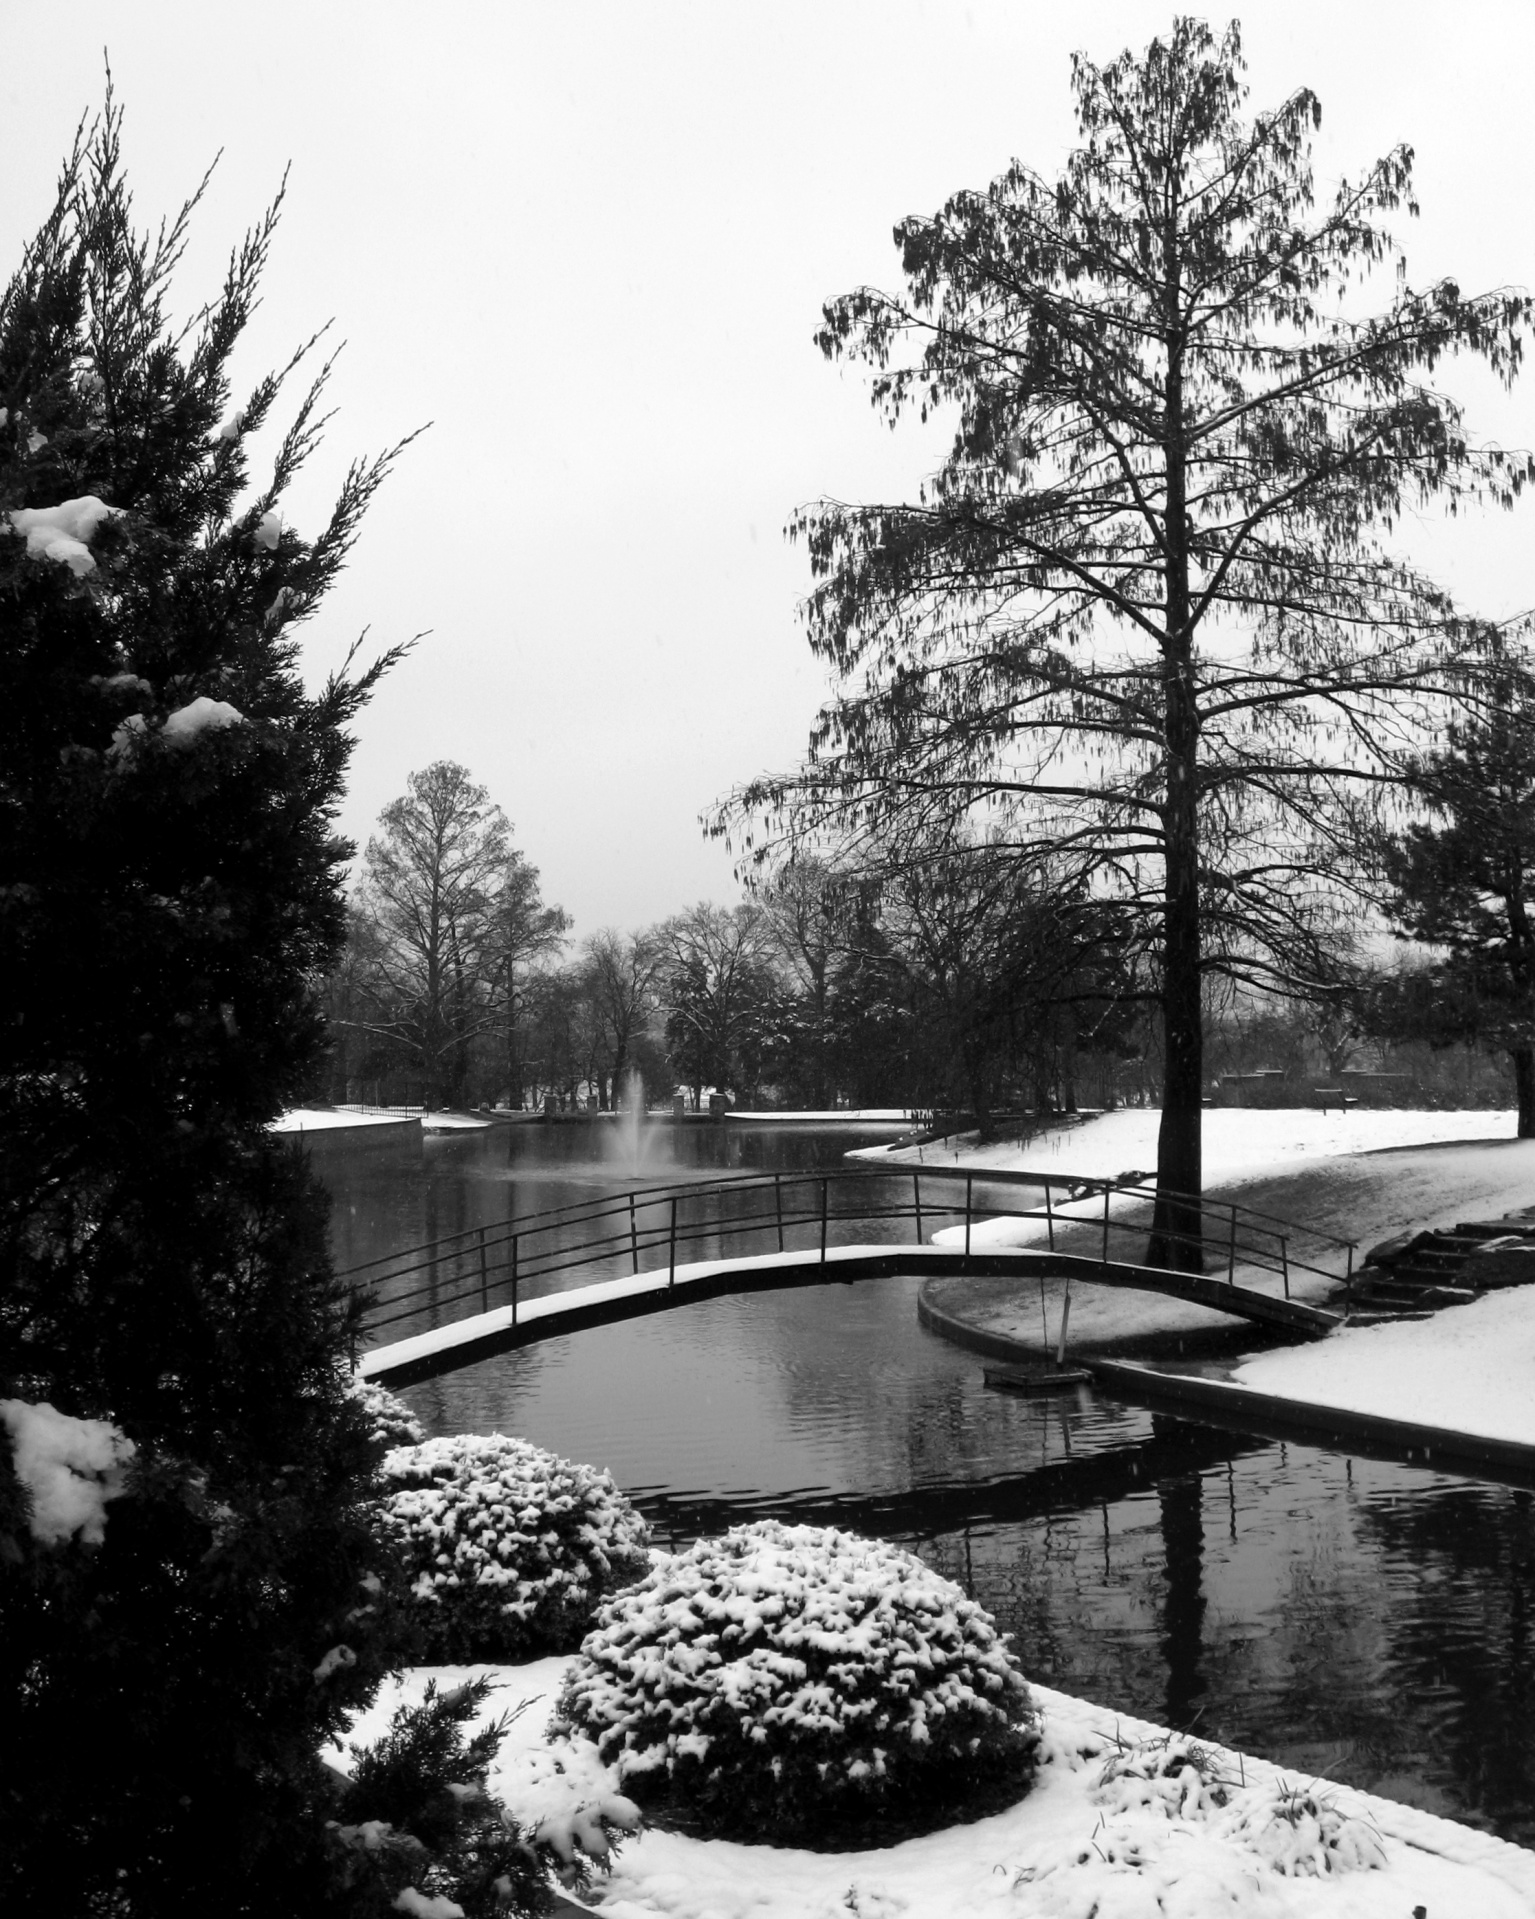 Snowy Bridge And Pond